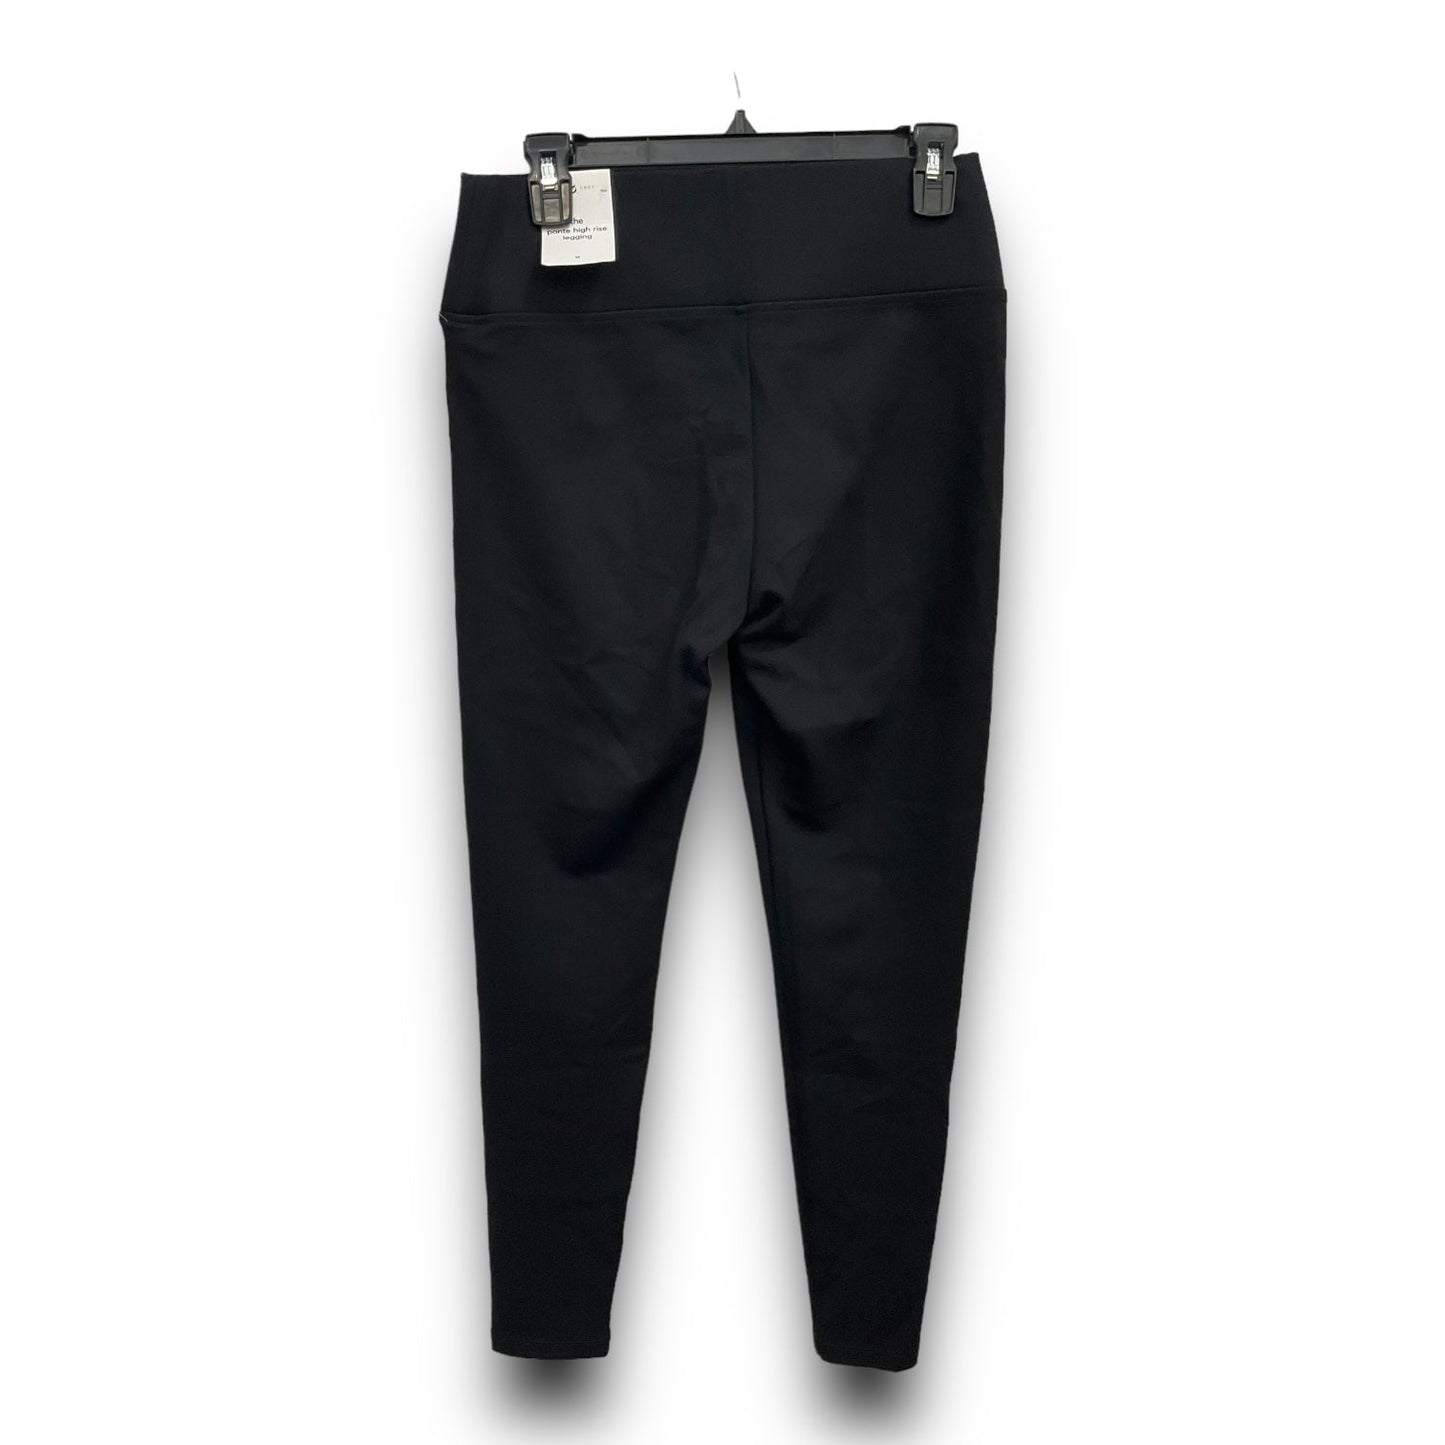 Black Pants Leggings Lou And Grey, Size M